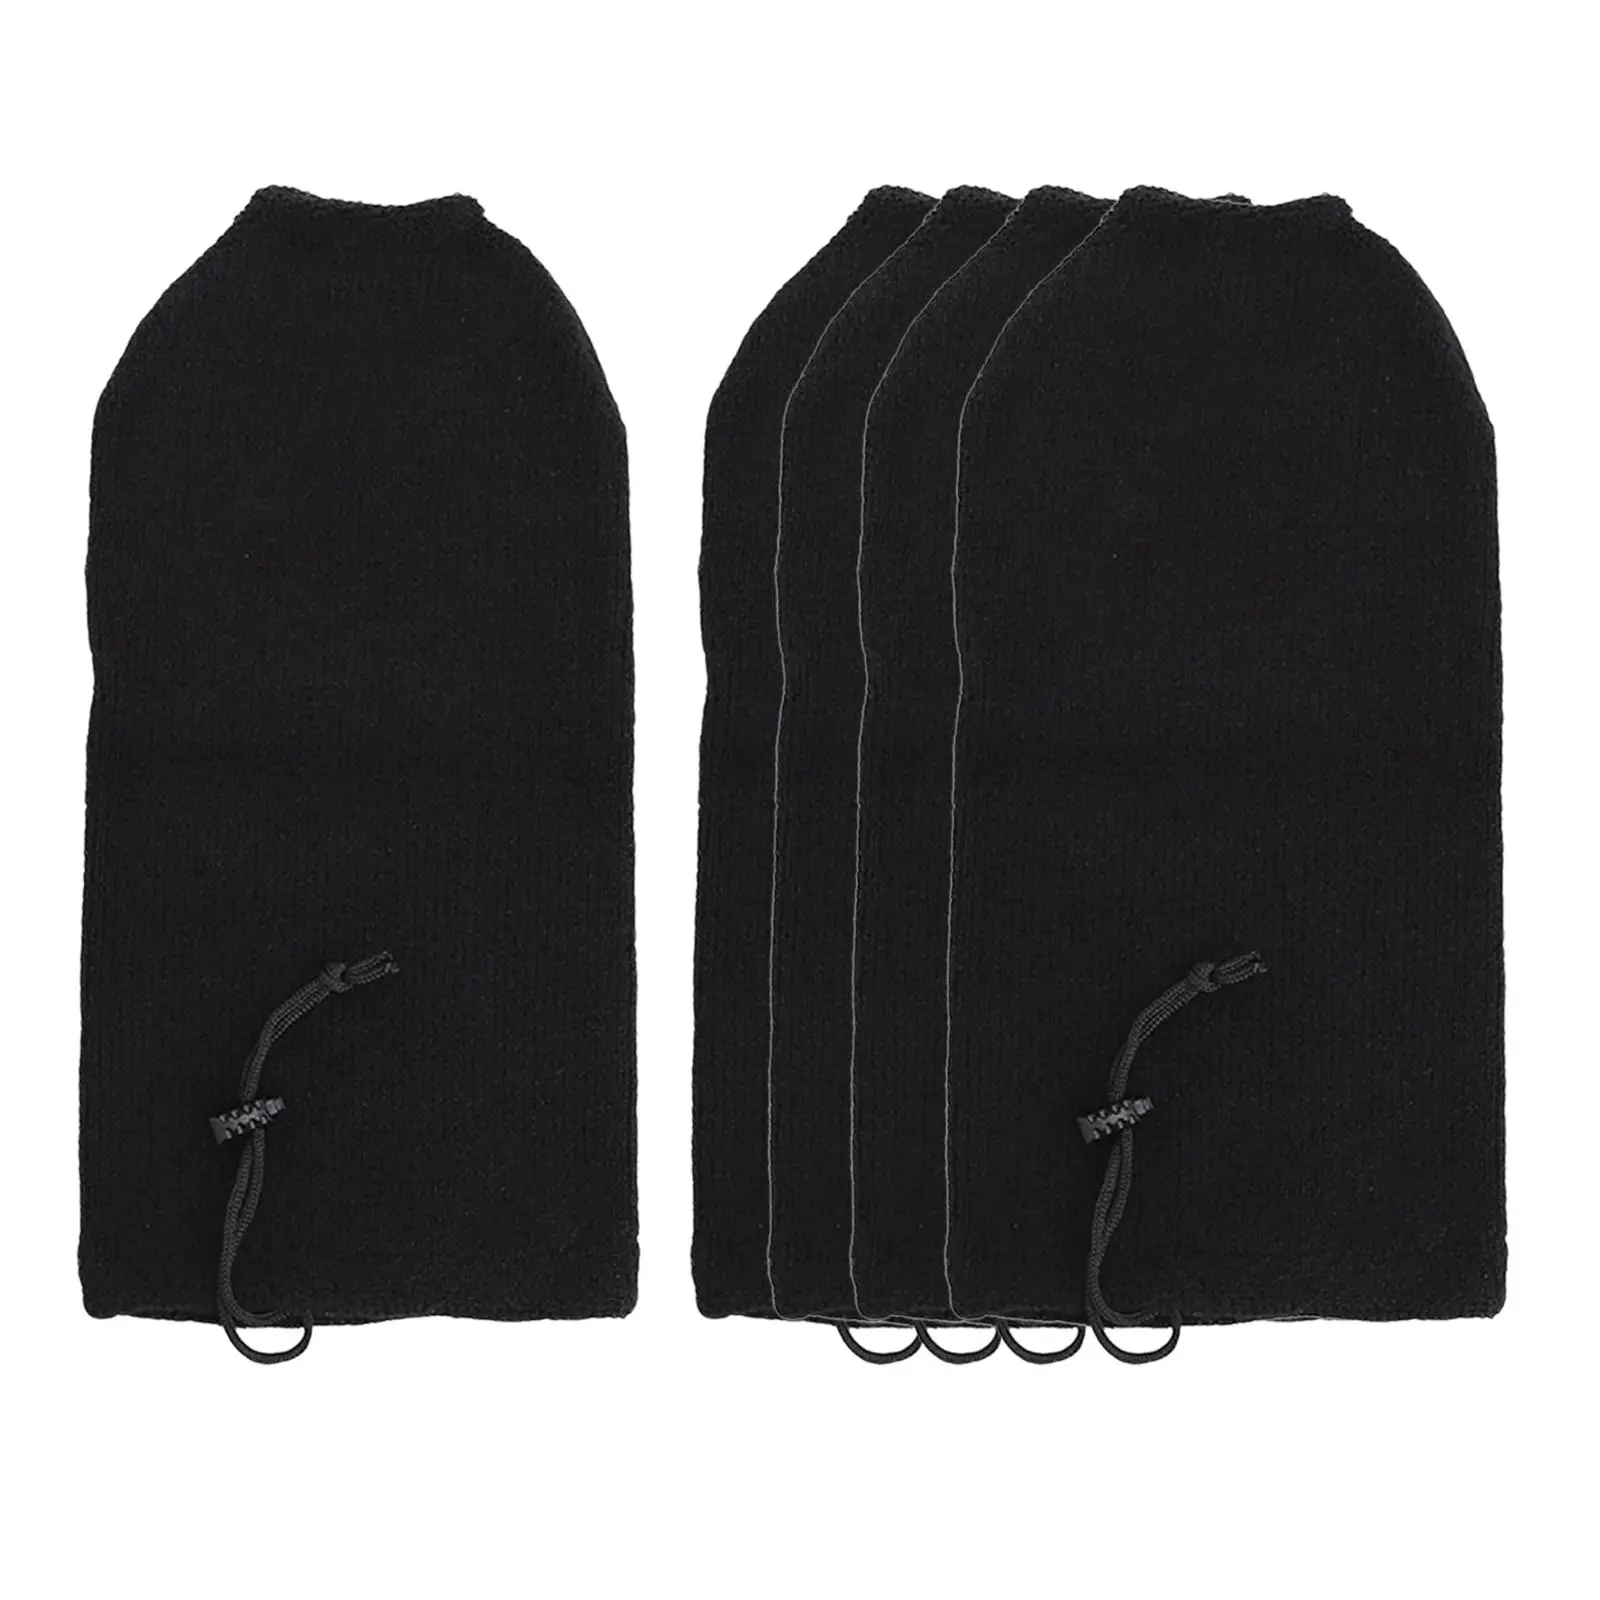 5 Bumper Cover, Soft Acrylic Ball Sleeve Woven Cover Black Protection  for Marine Bumper Yacht Salt Protection Sun 